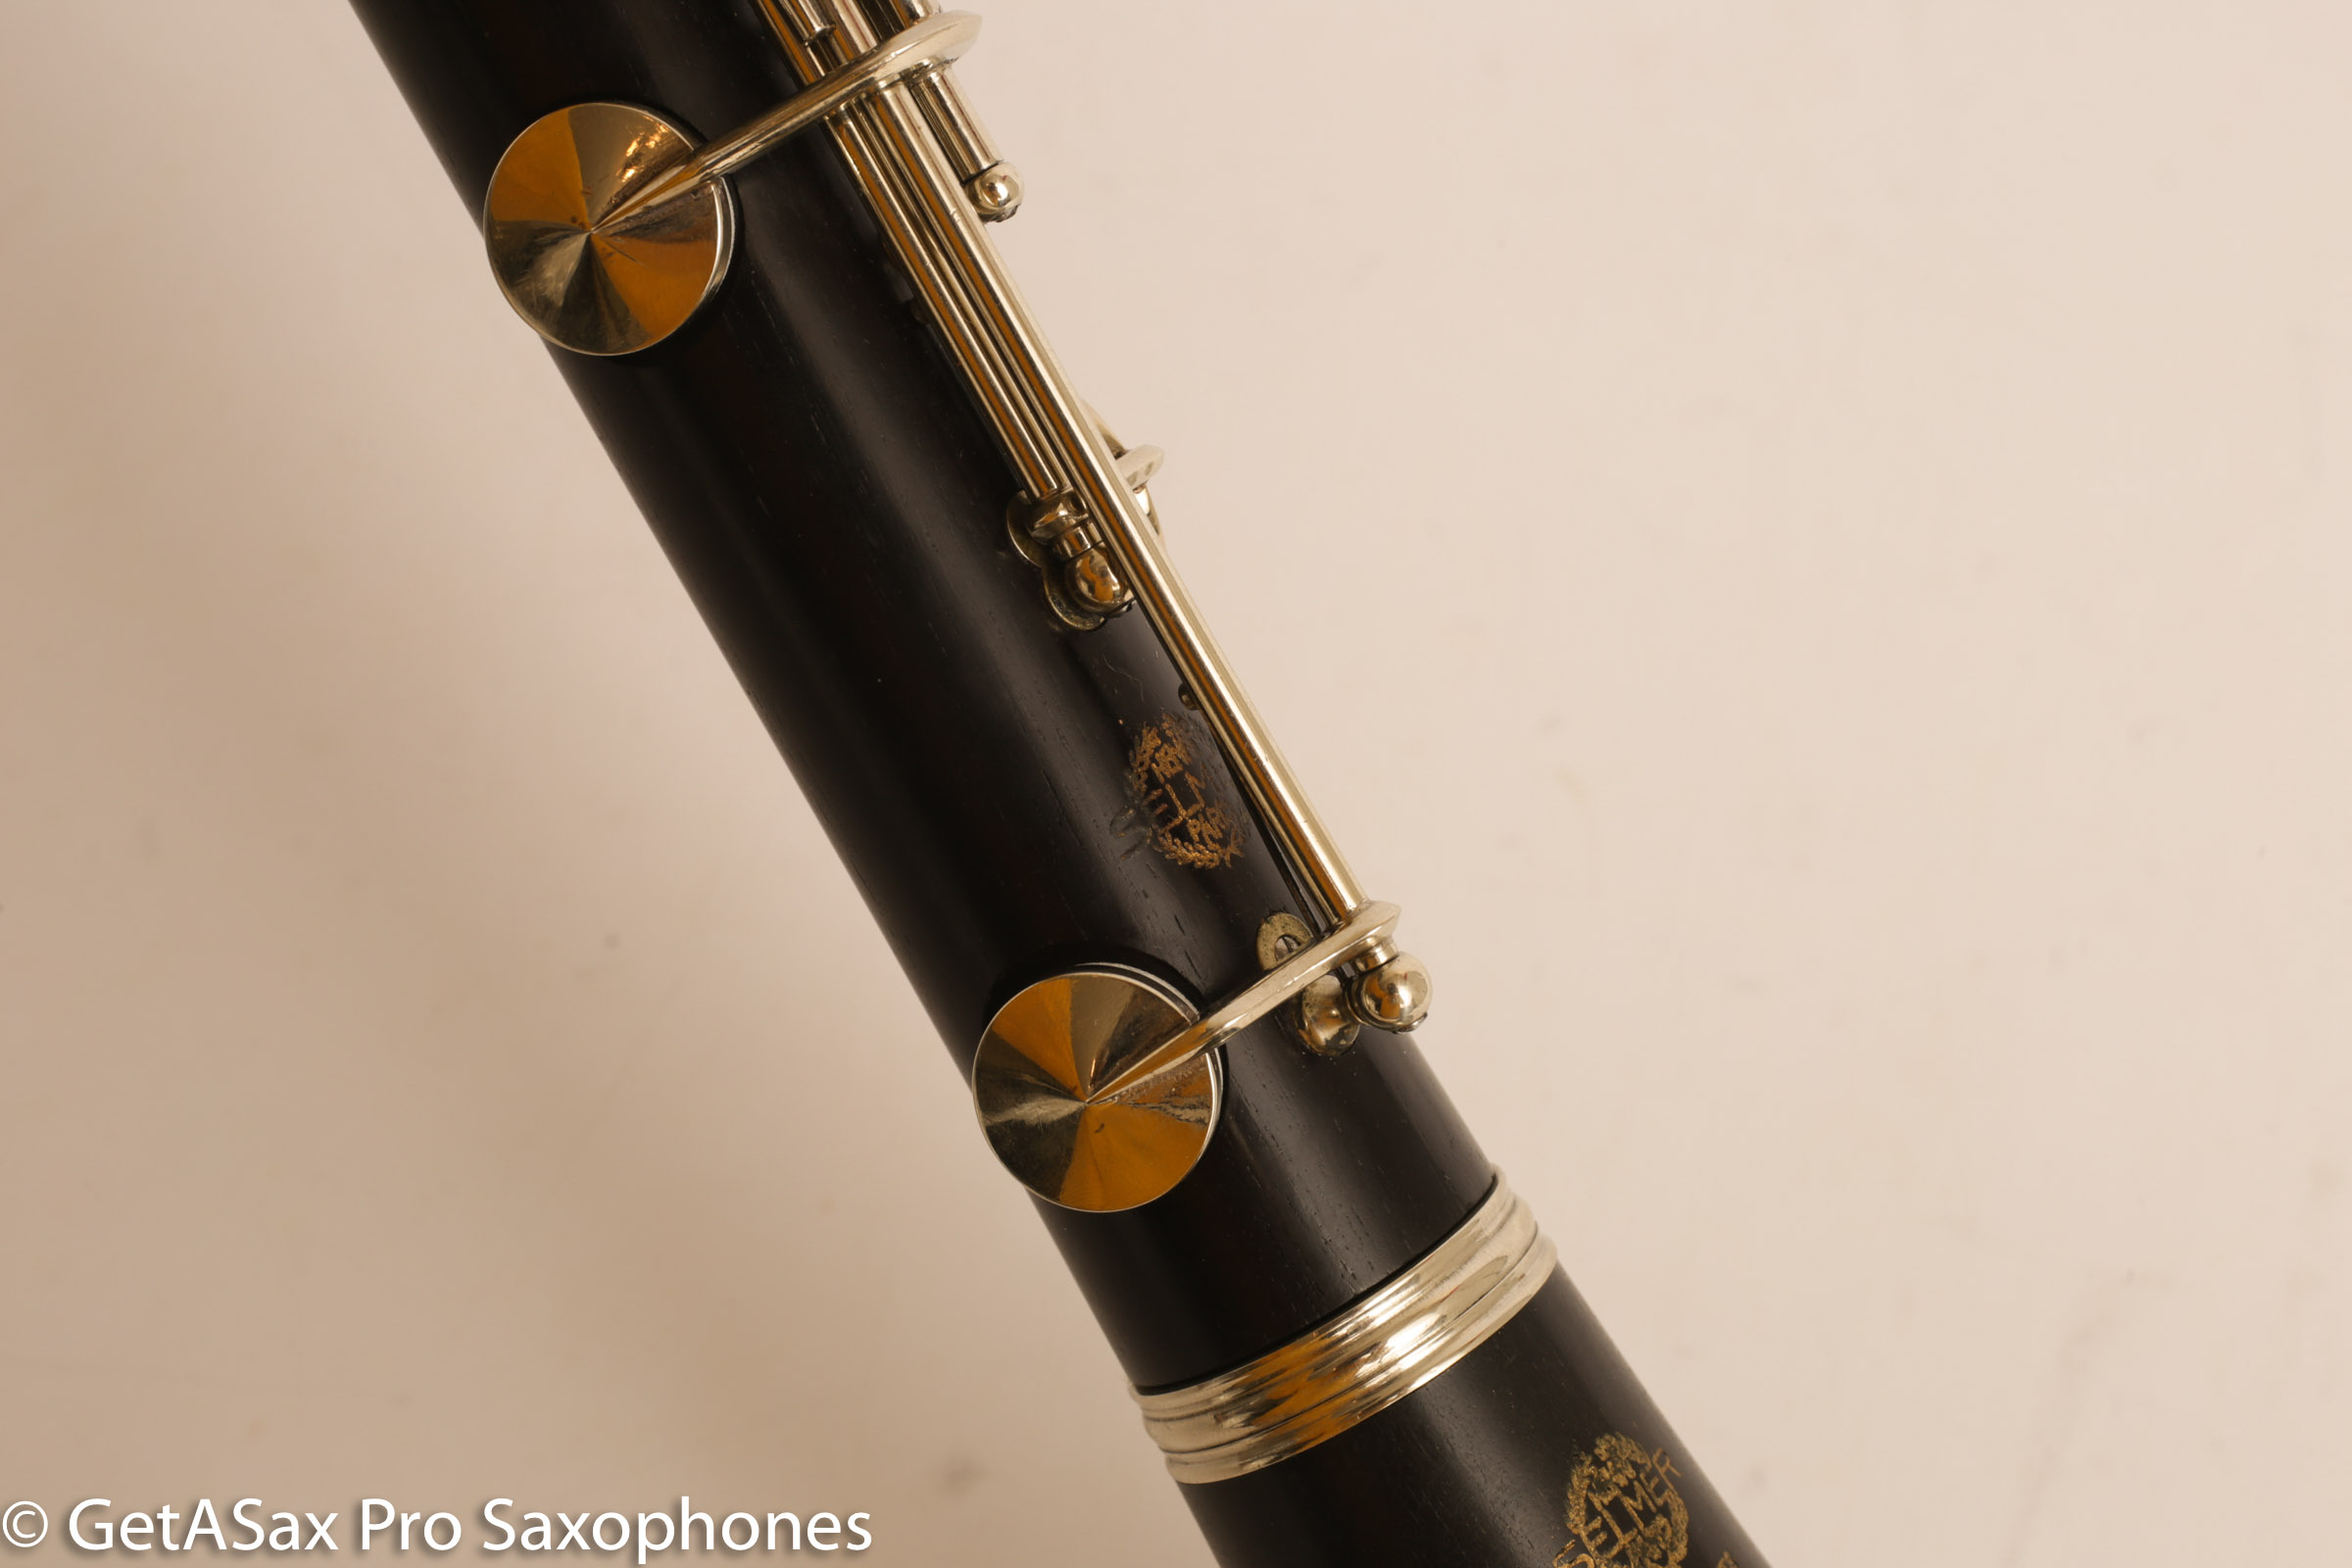 Selmer Centered Tone Clarinet Overhauled Beautiful! - www.GetASax.com